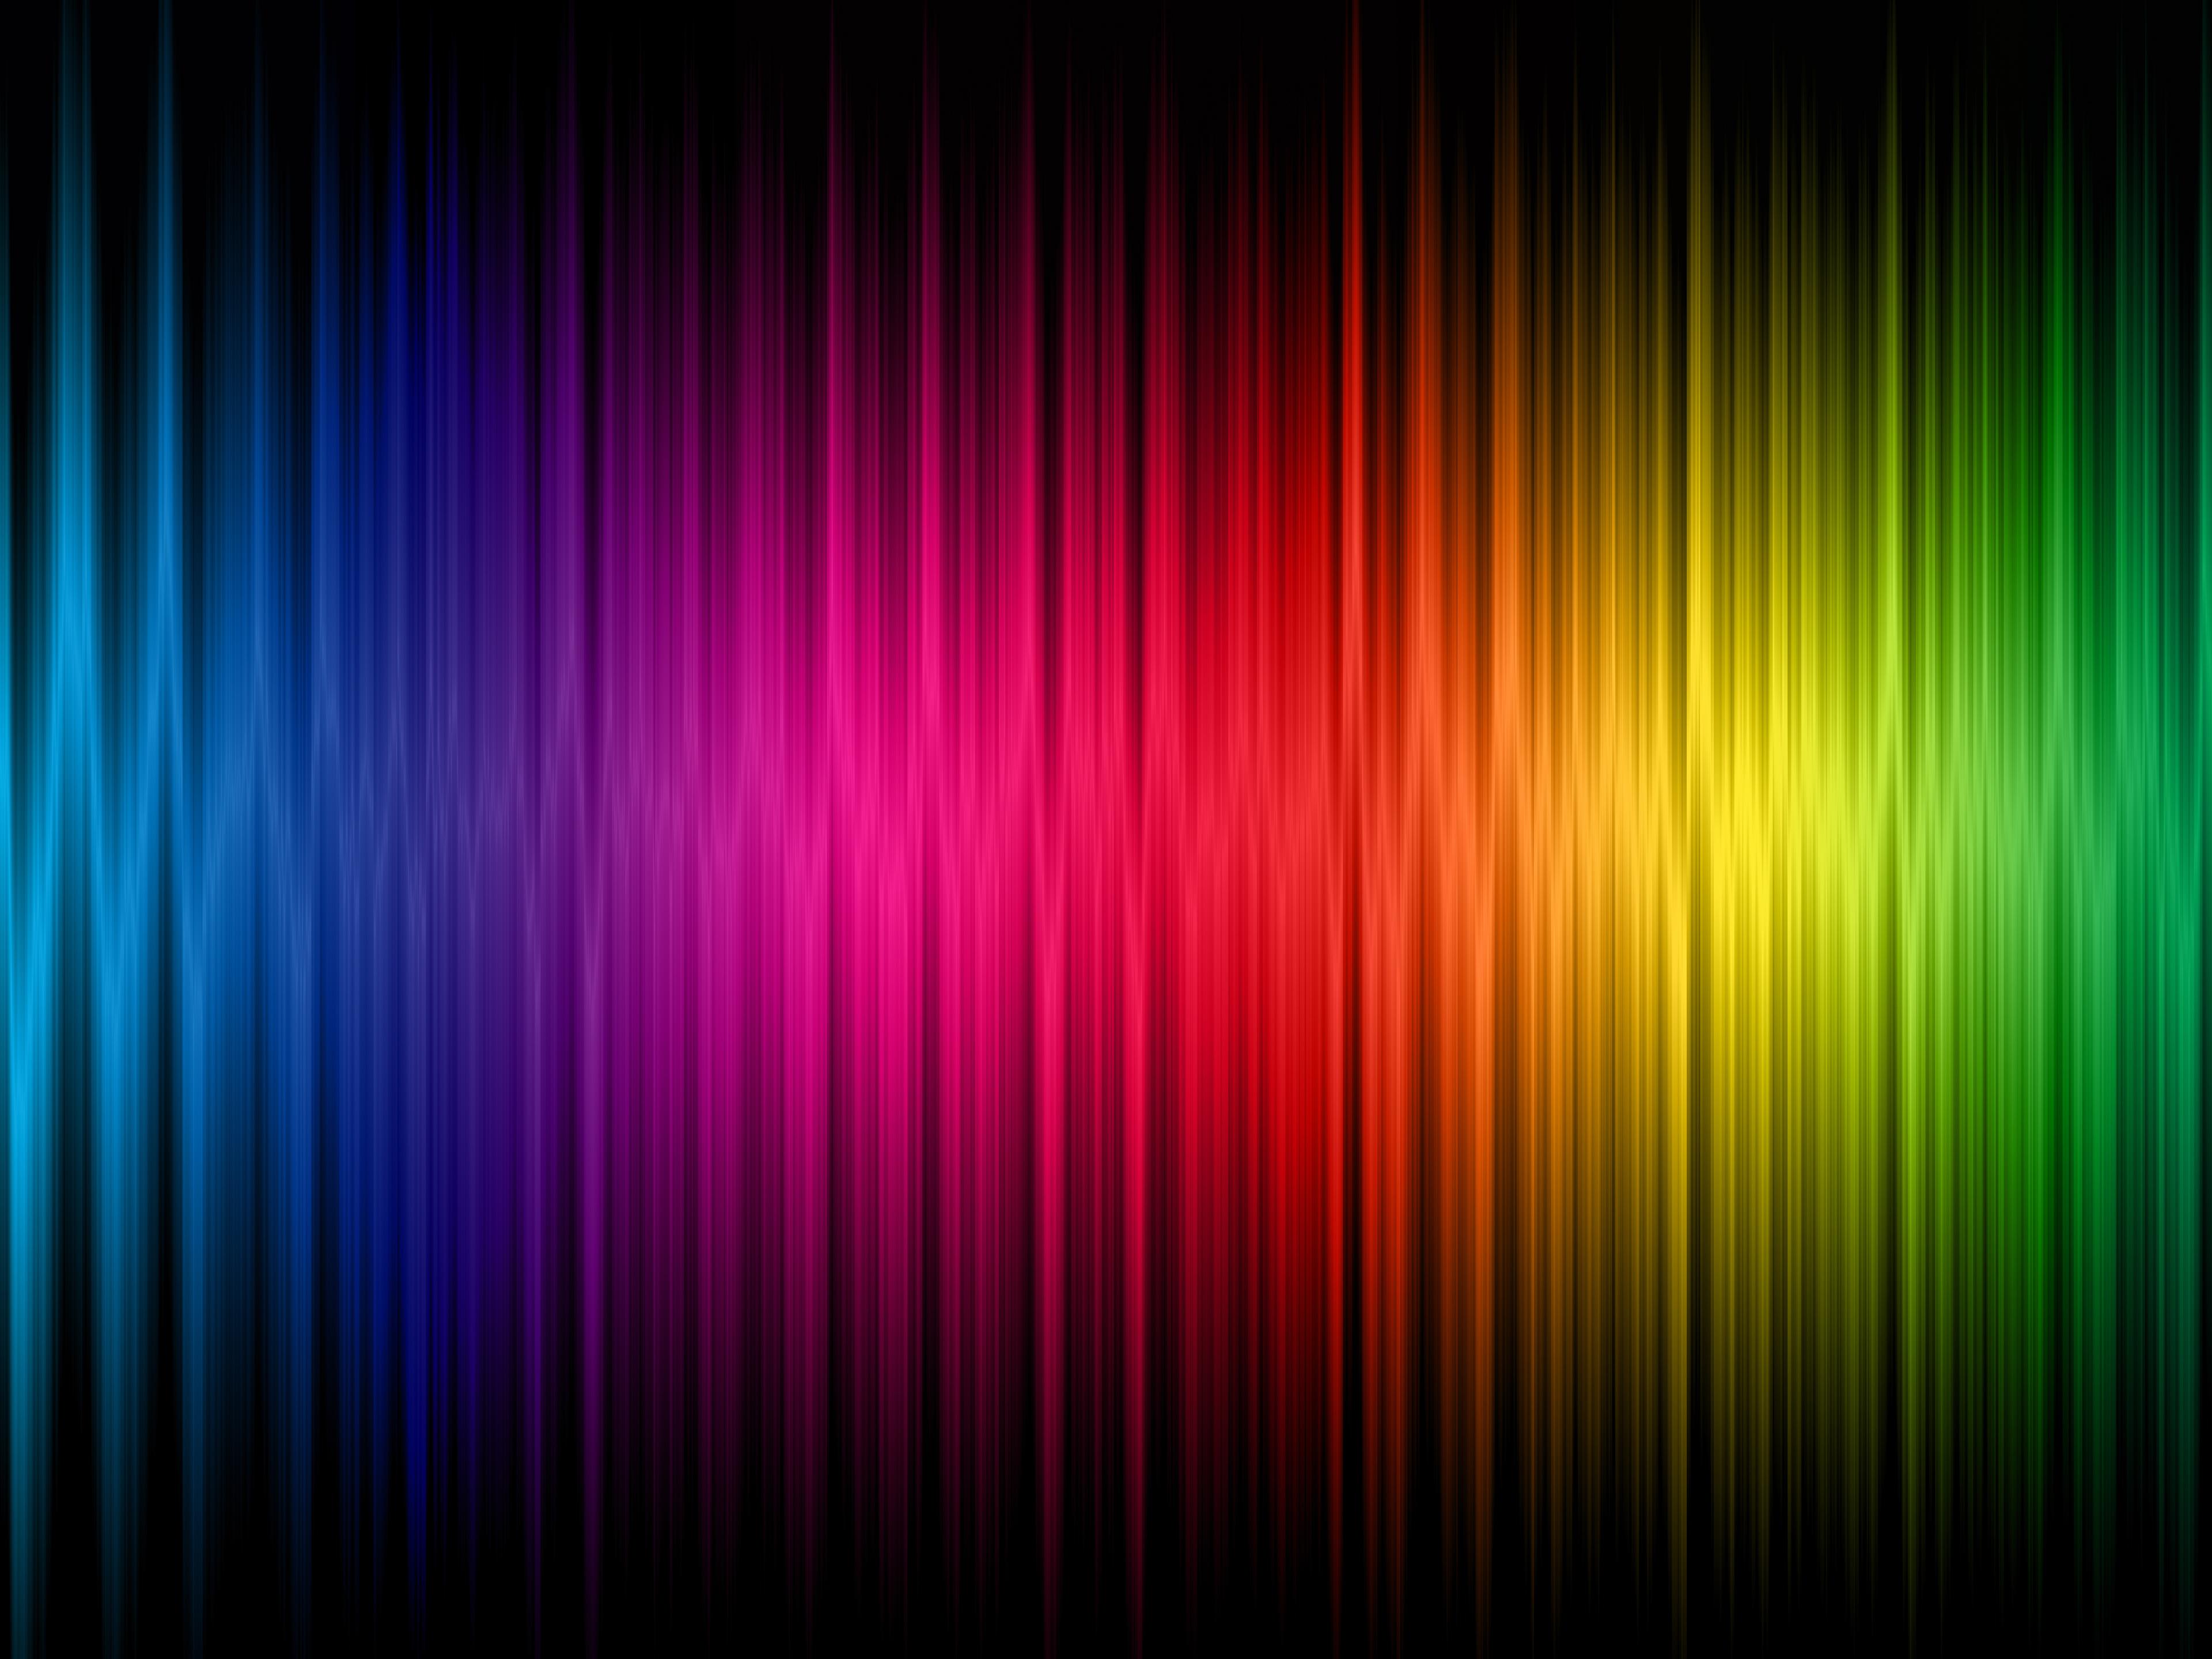 Artistic representation of spectral wavelength bands